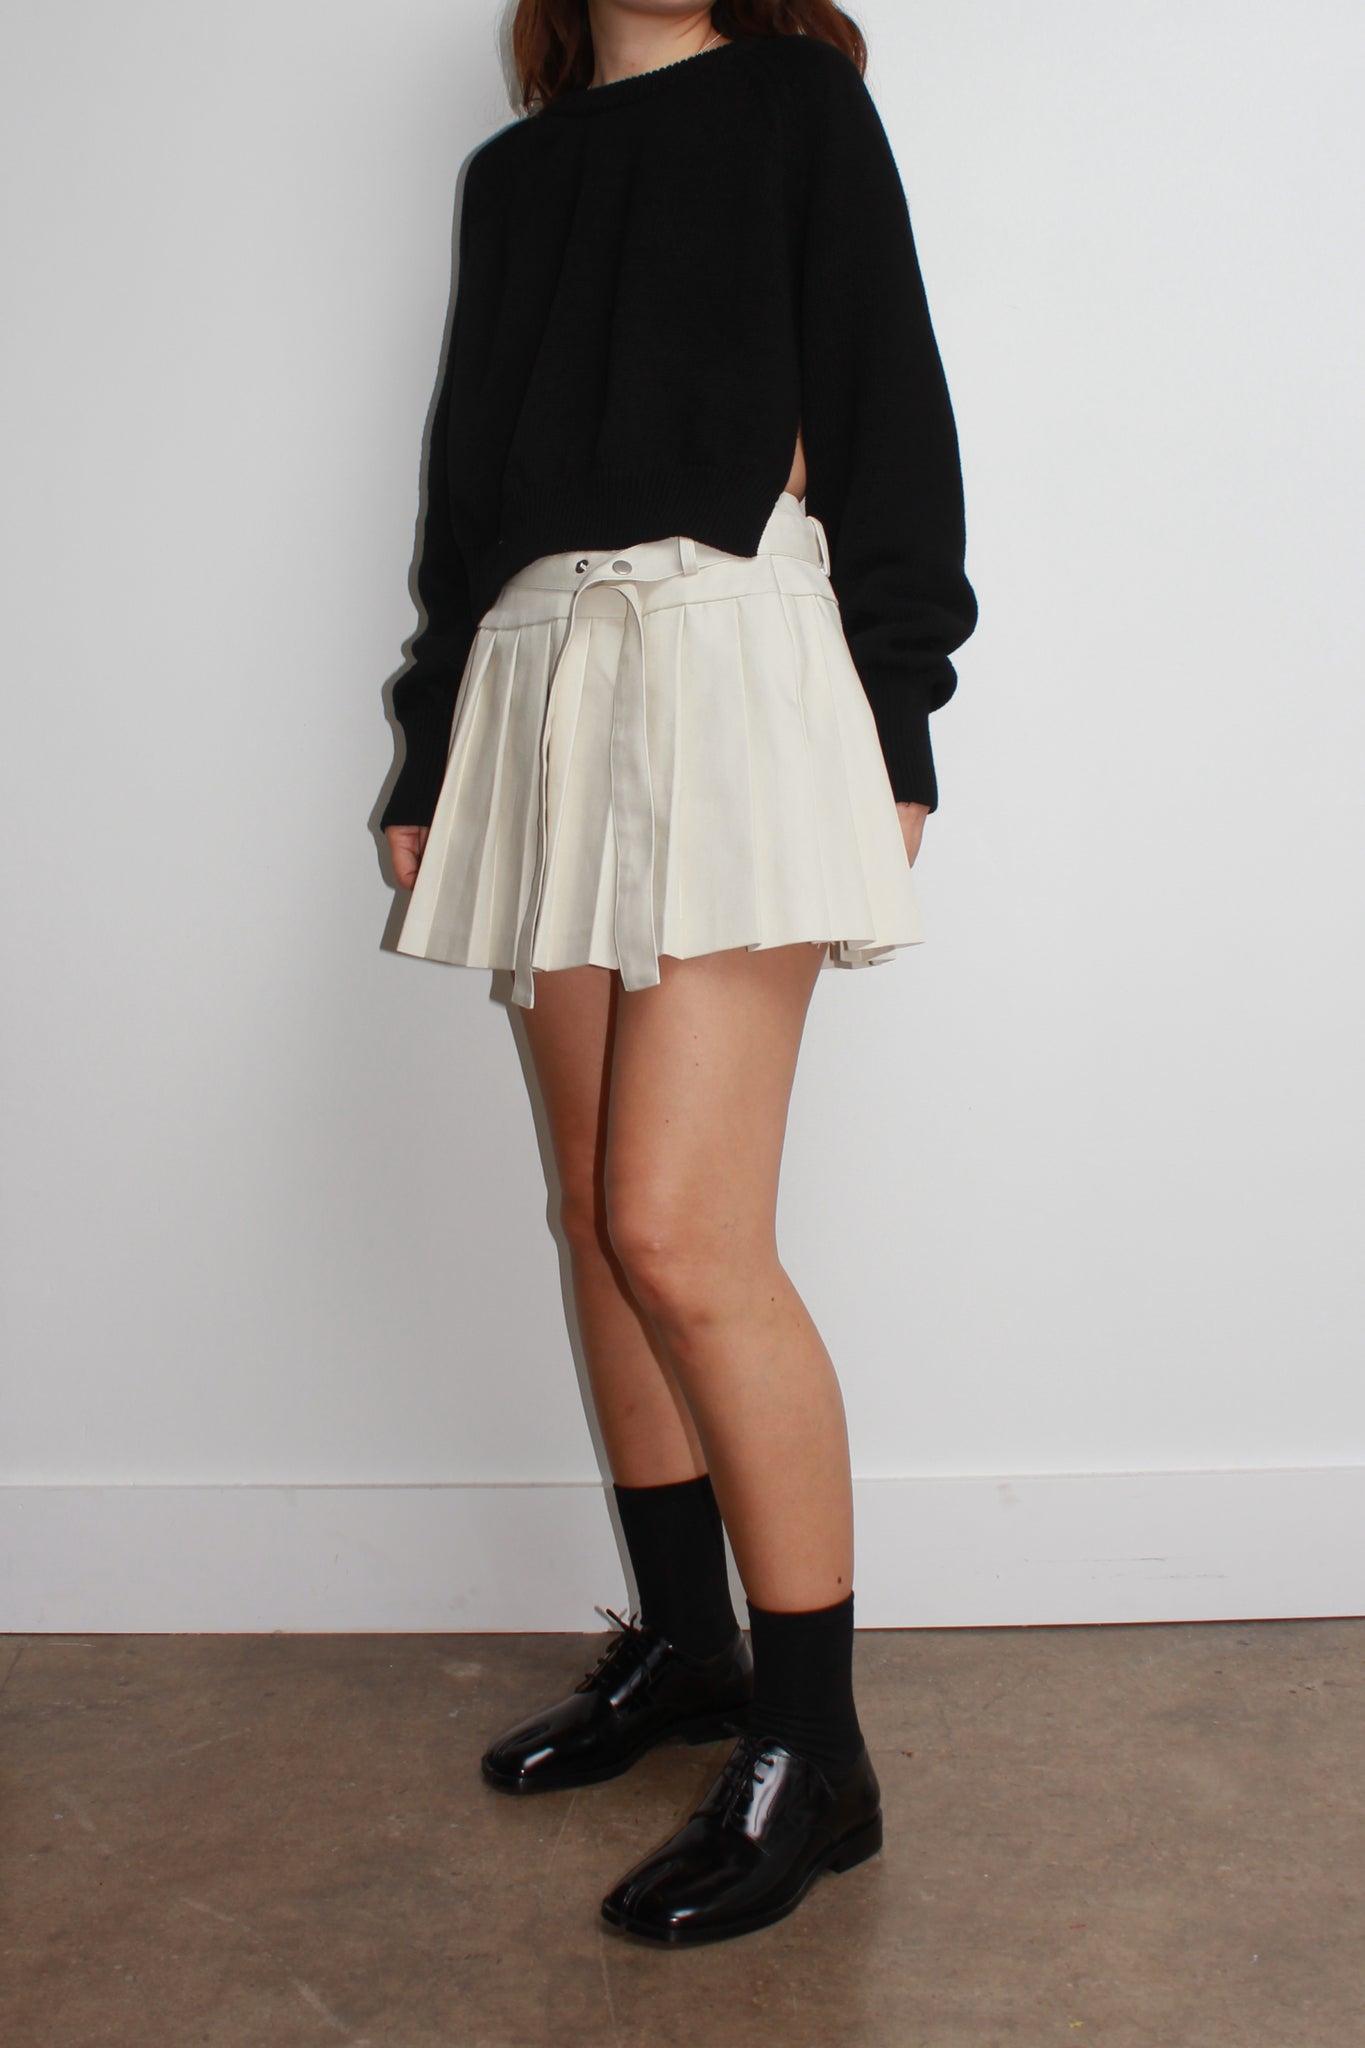 Frill Pleats Mini Skirt in Off White Denim